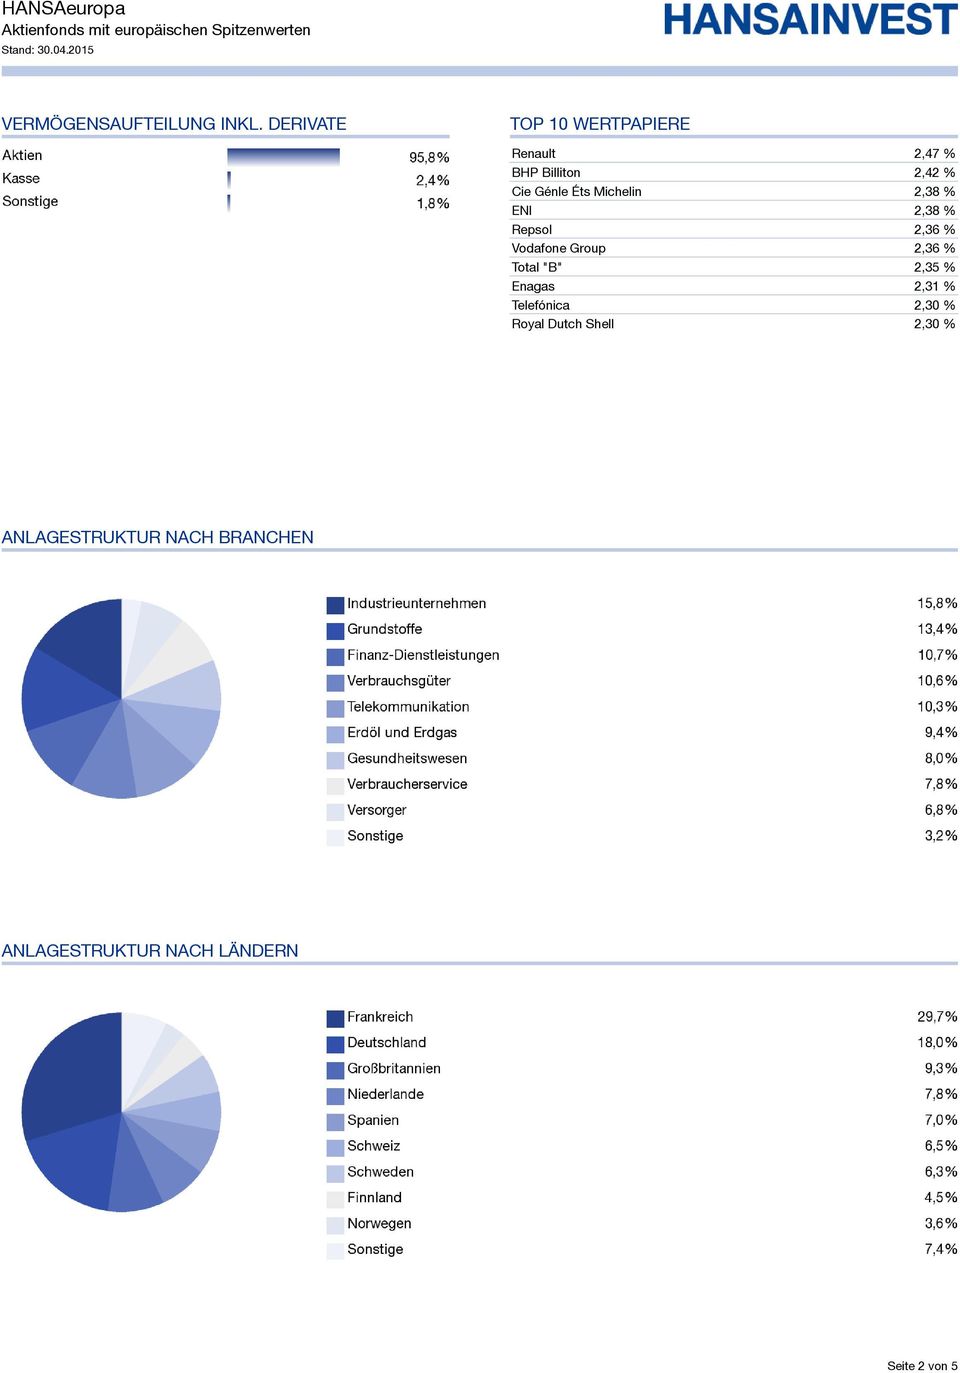 Michelin 2,38 % ENI 2,38 % Repsol 2,36 % Vodafone Group 2,36 % Total "B" 2,35